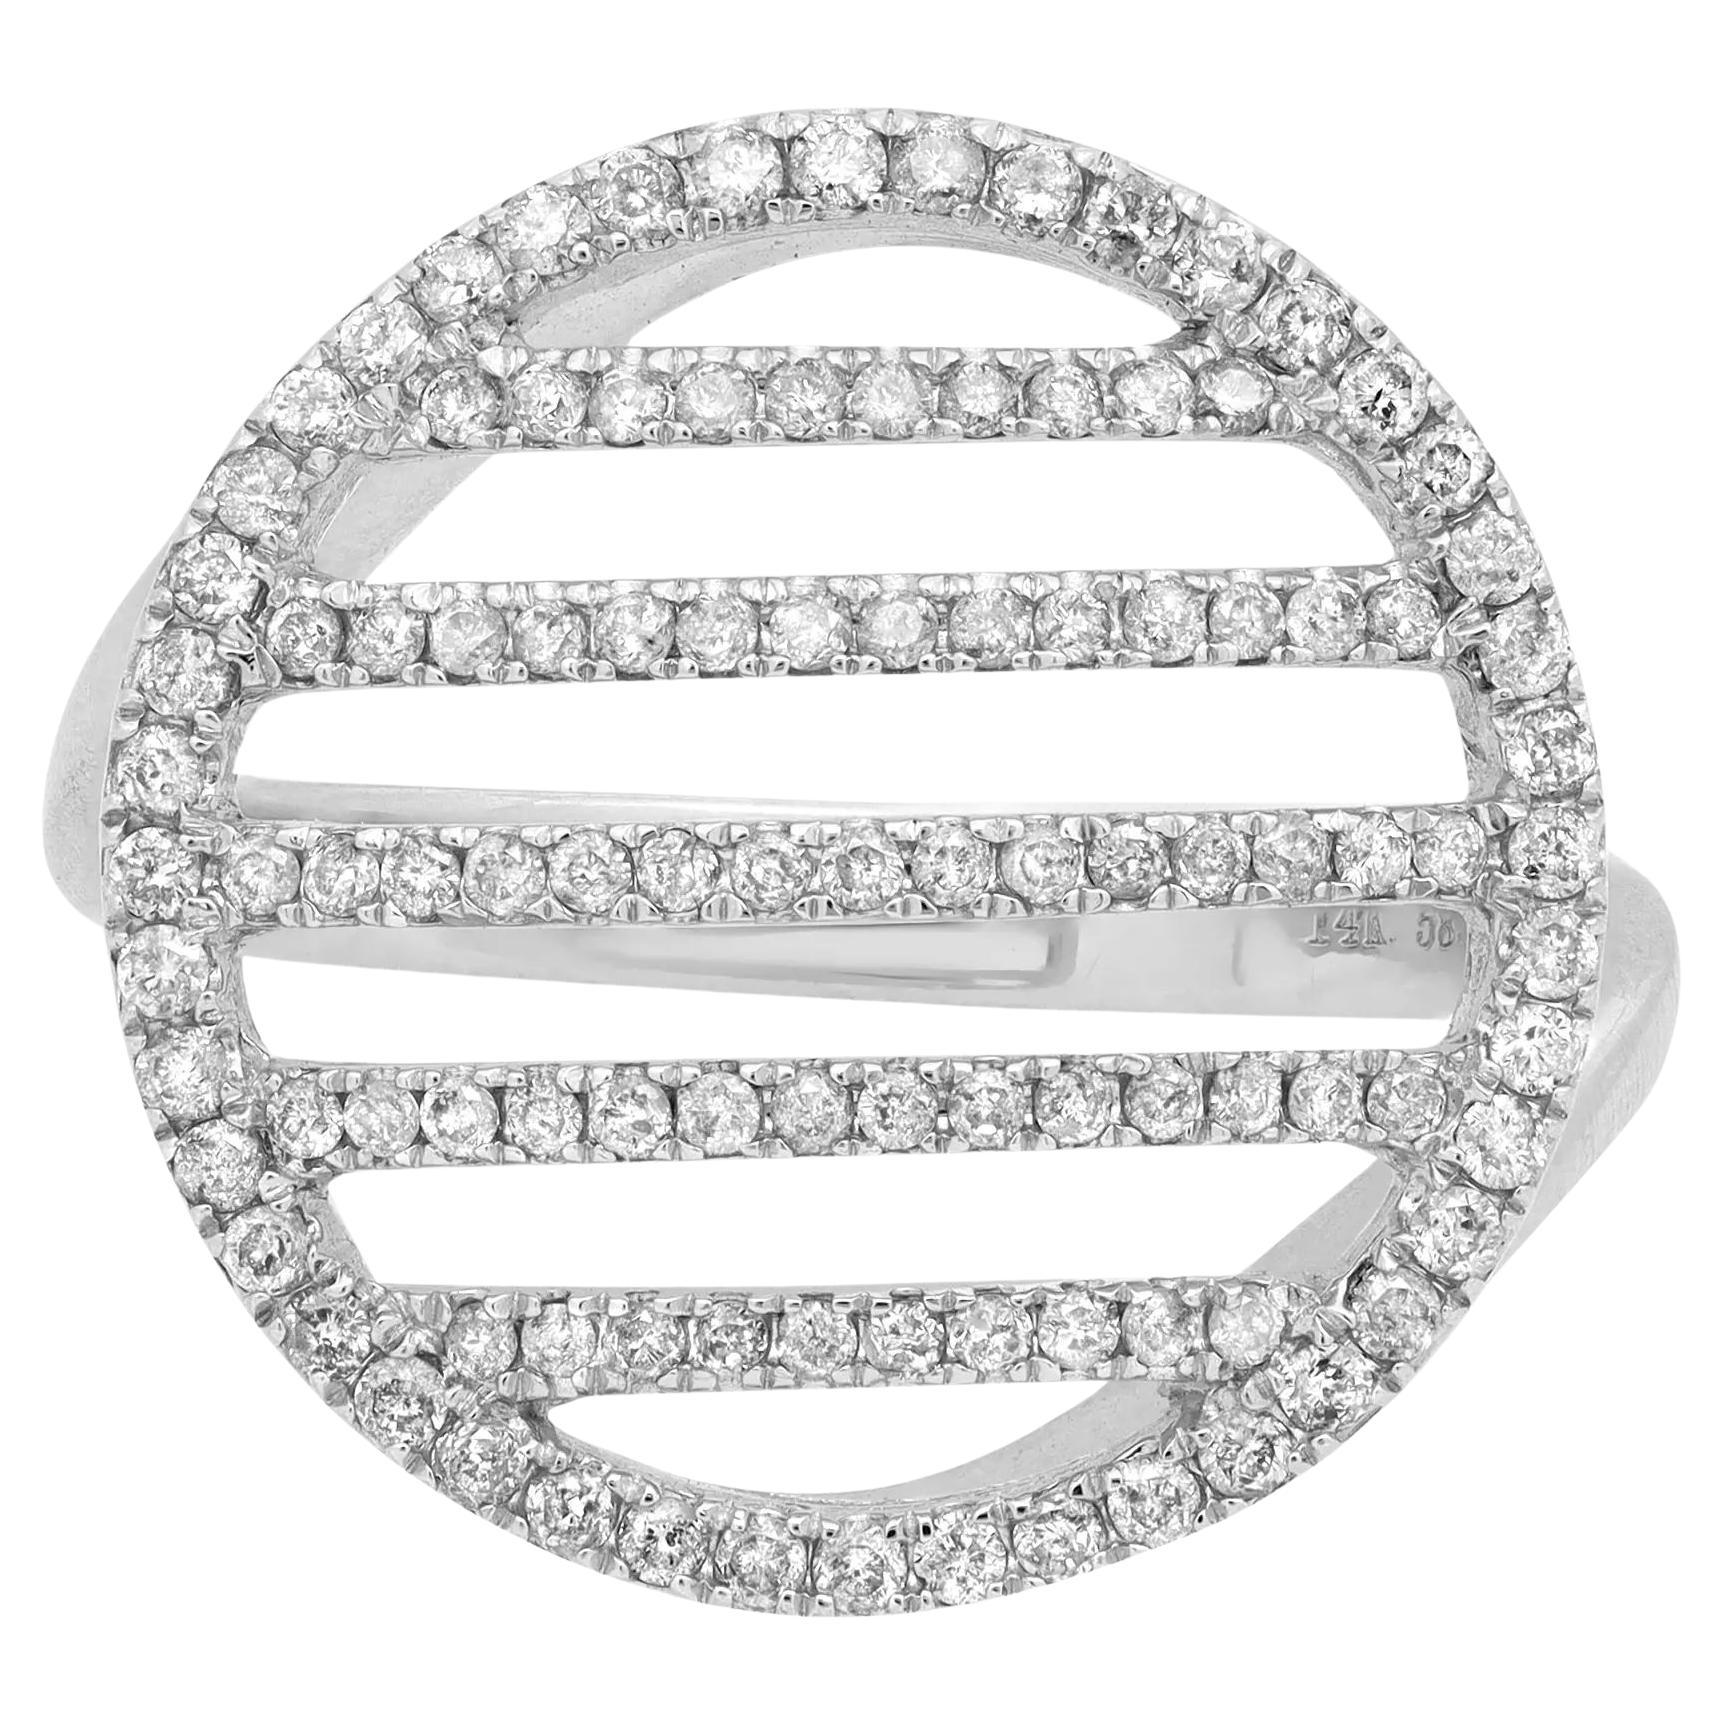 Rachel Koen 0.70cttw Round Cut Diamond Cocktail Ring 14k White Gold For Sale